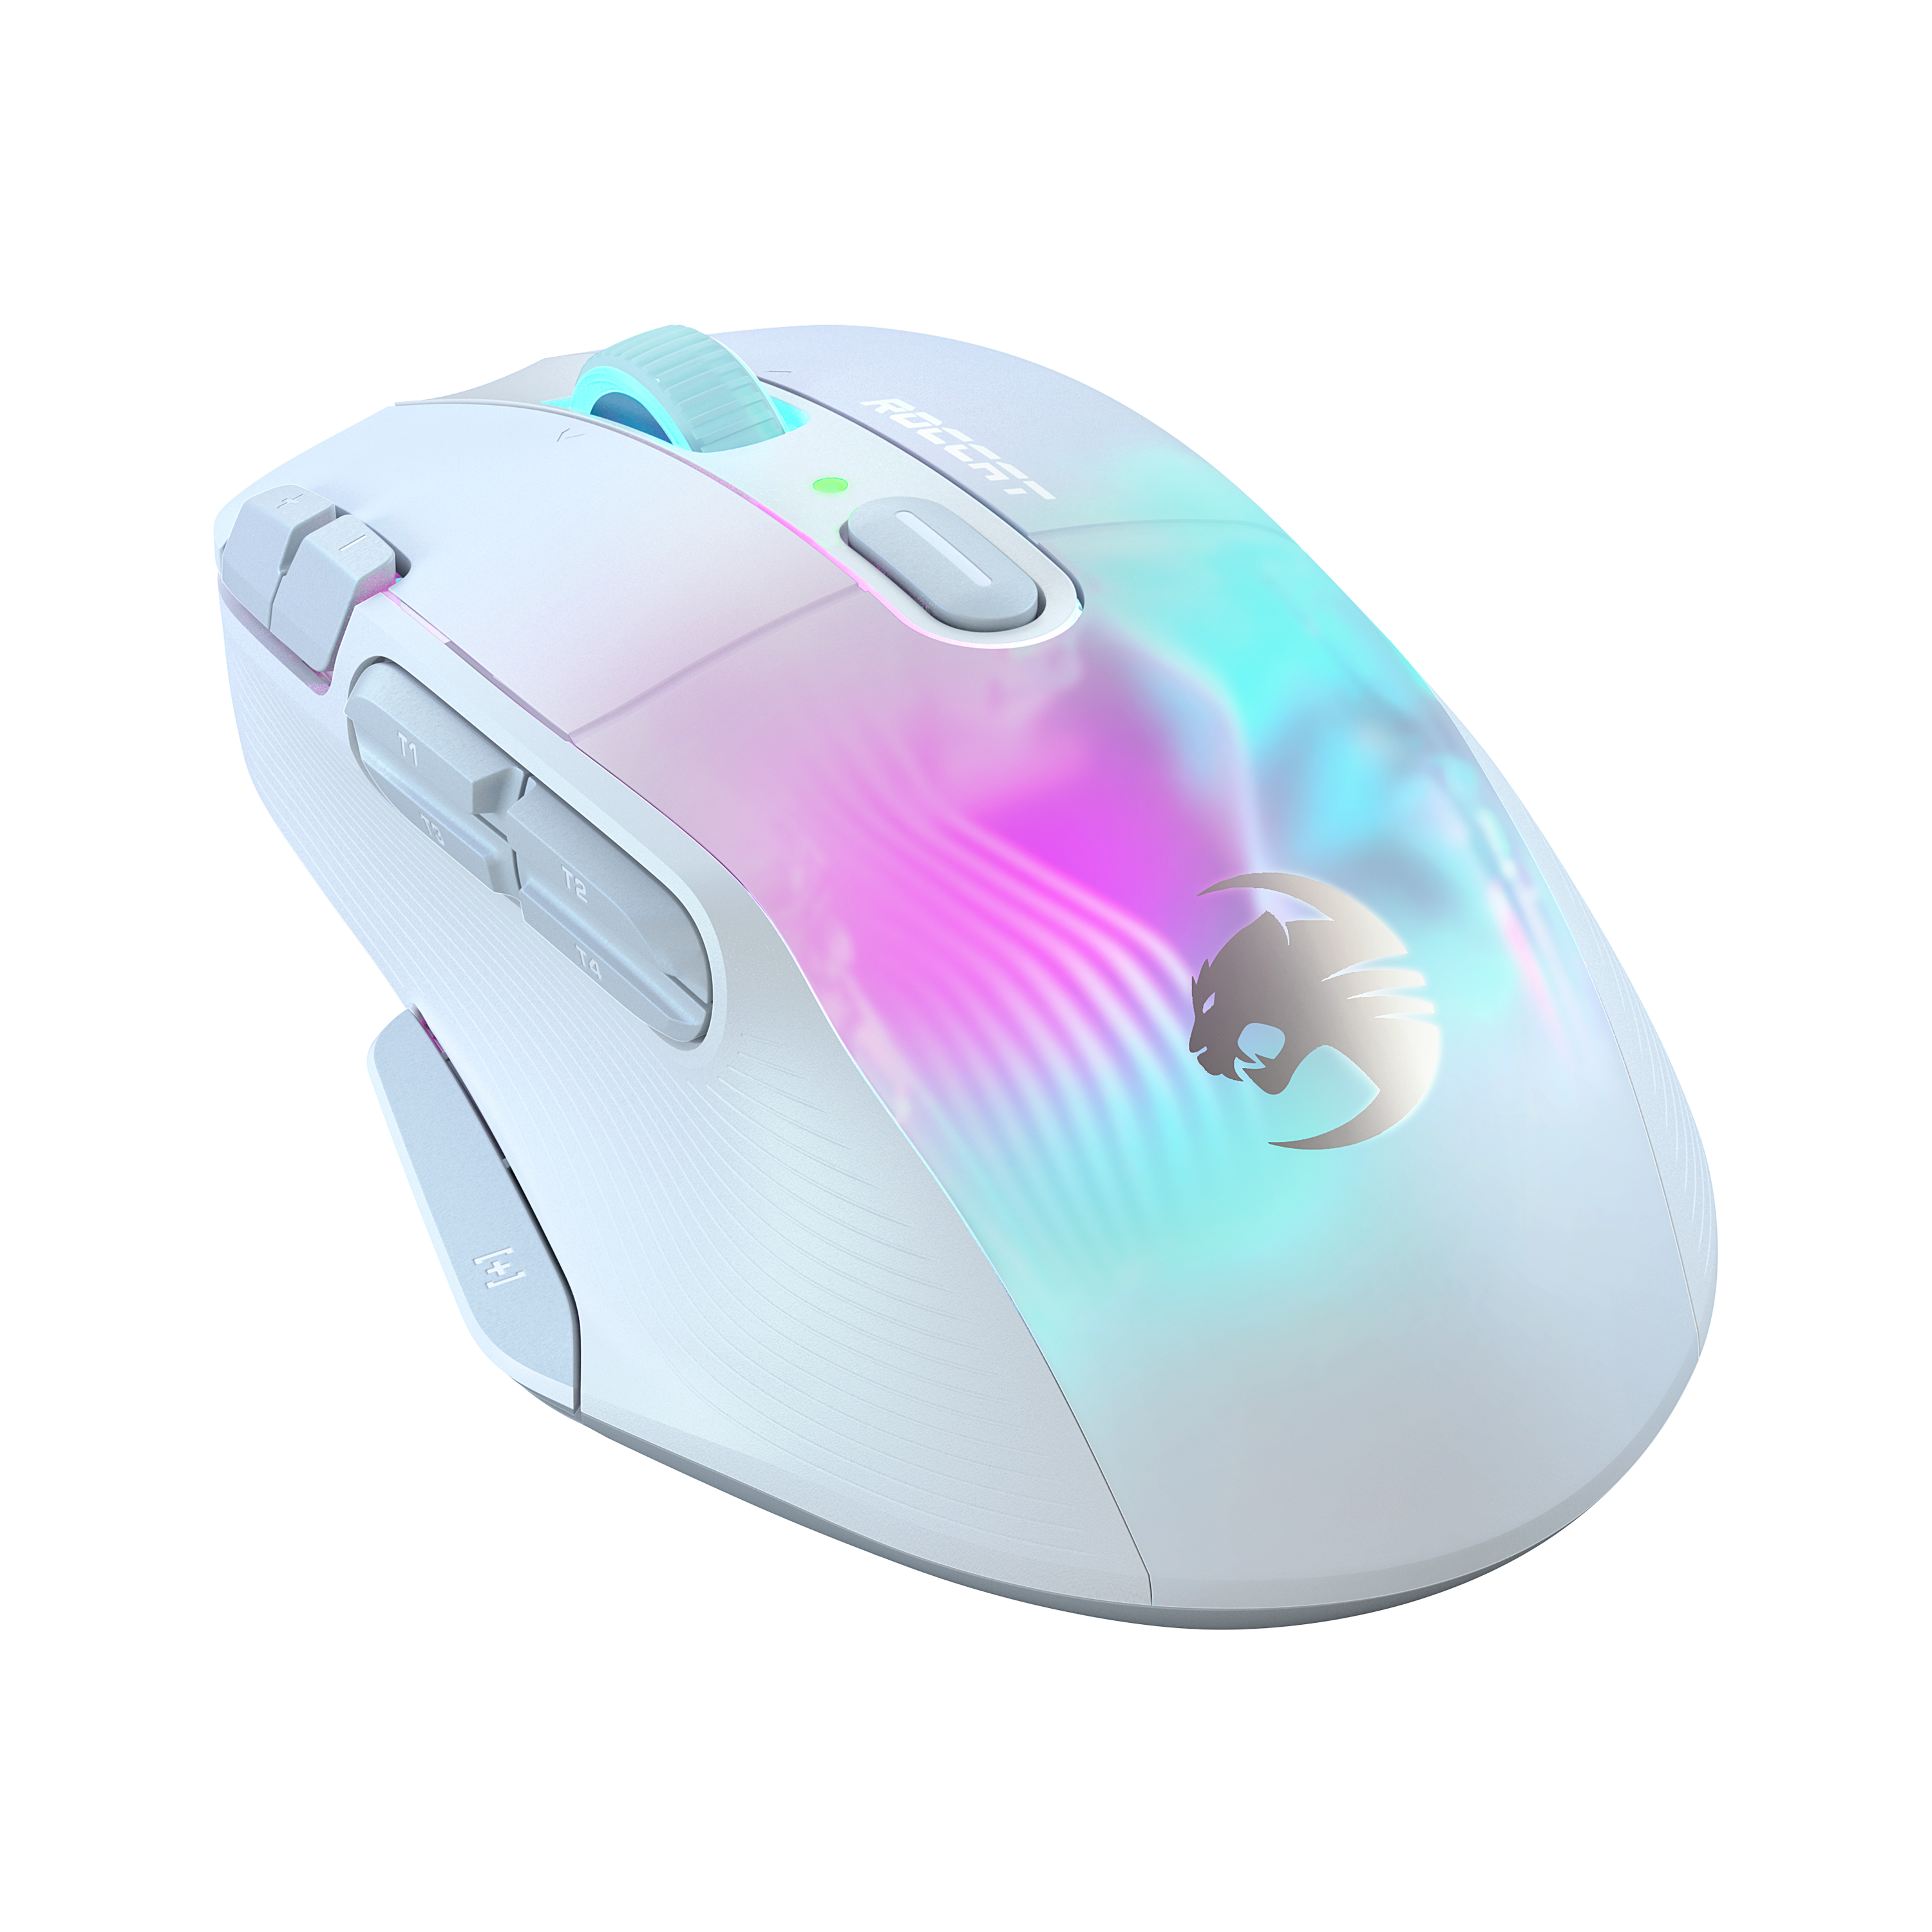 Kaufe Roccat - Kone XP - Wireless Versandkostenfrei Mouse White - Gaming - Air